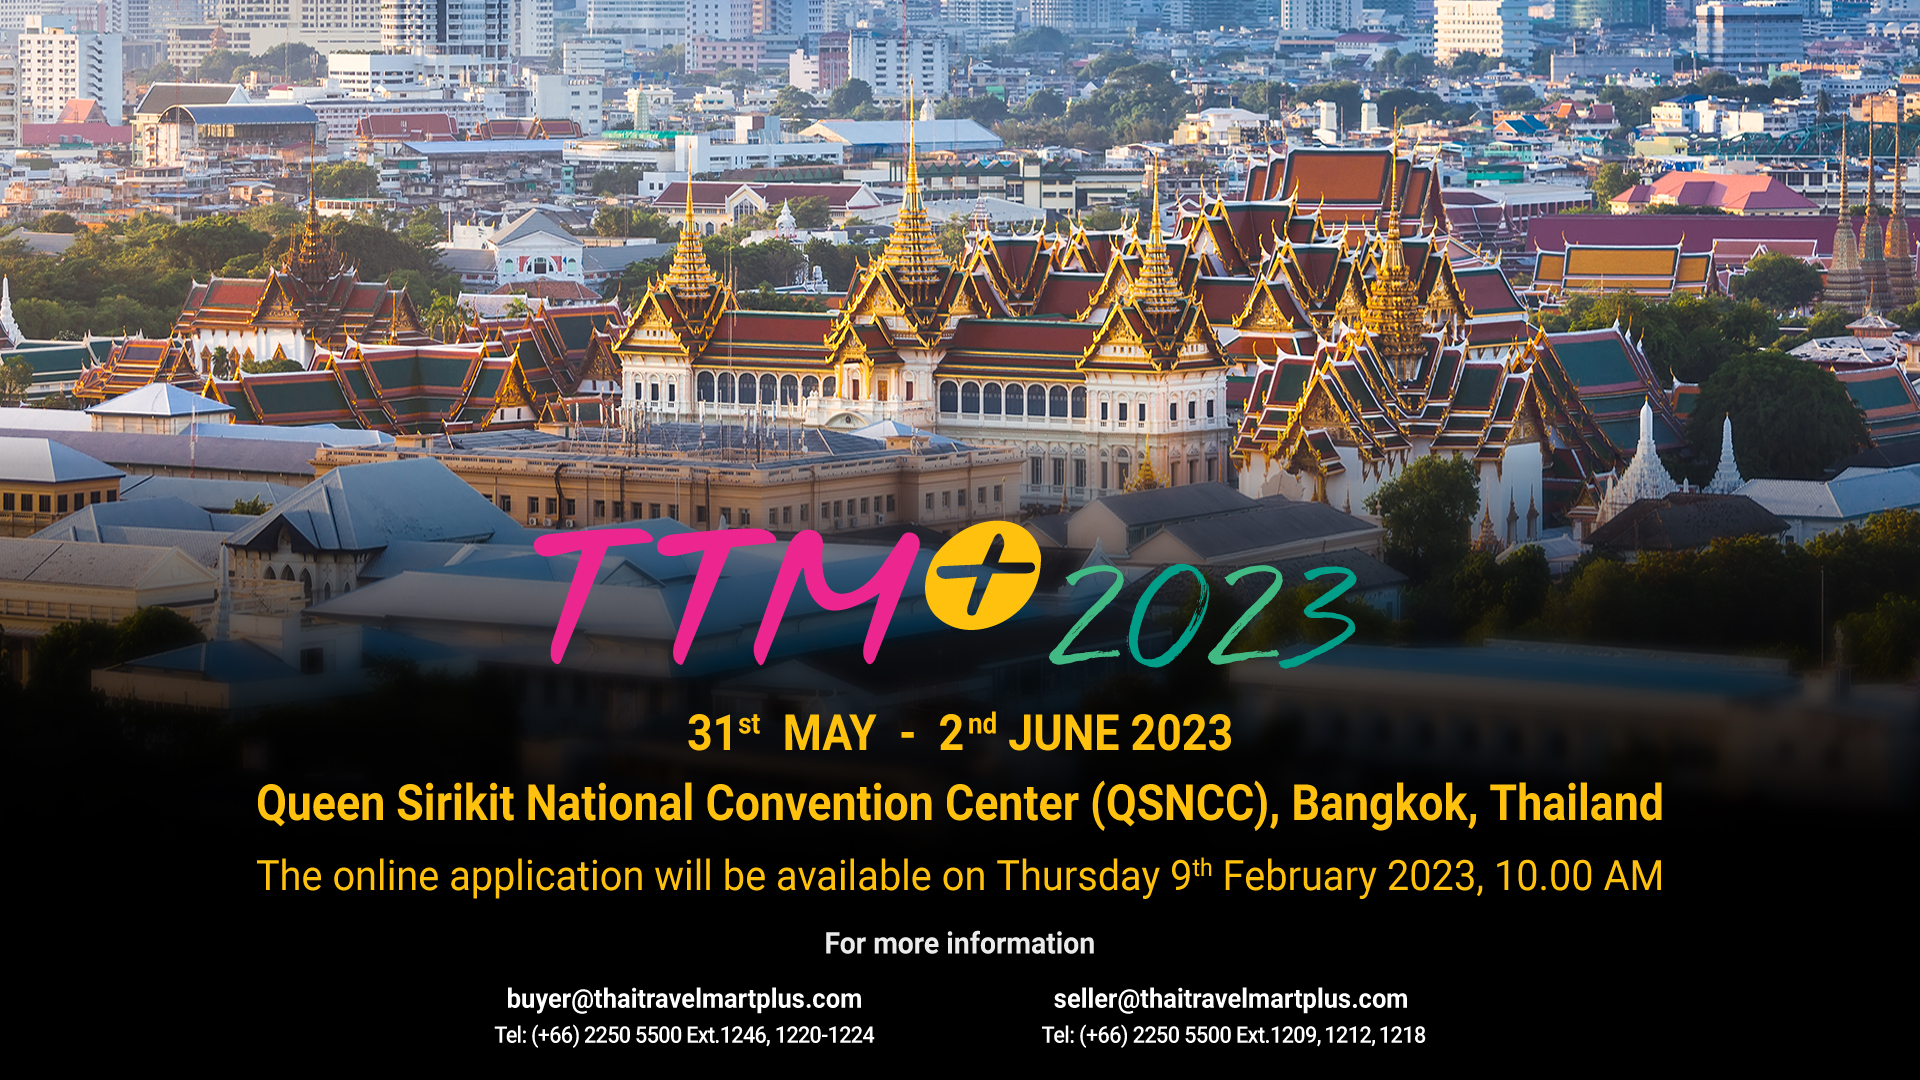 Thailand Travel Mart Plus 2023 (TTM+2023)